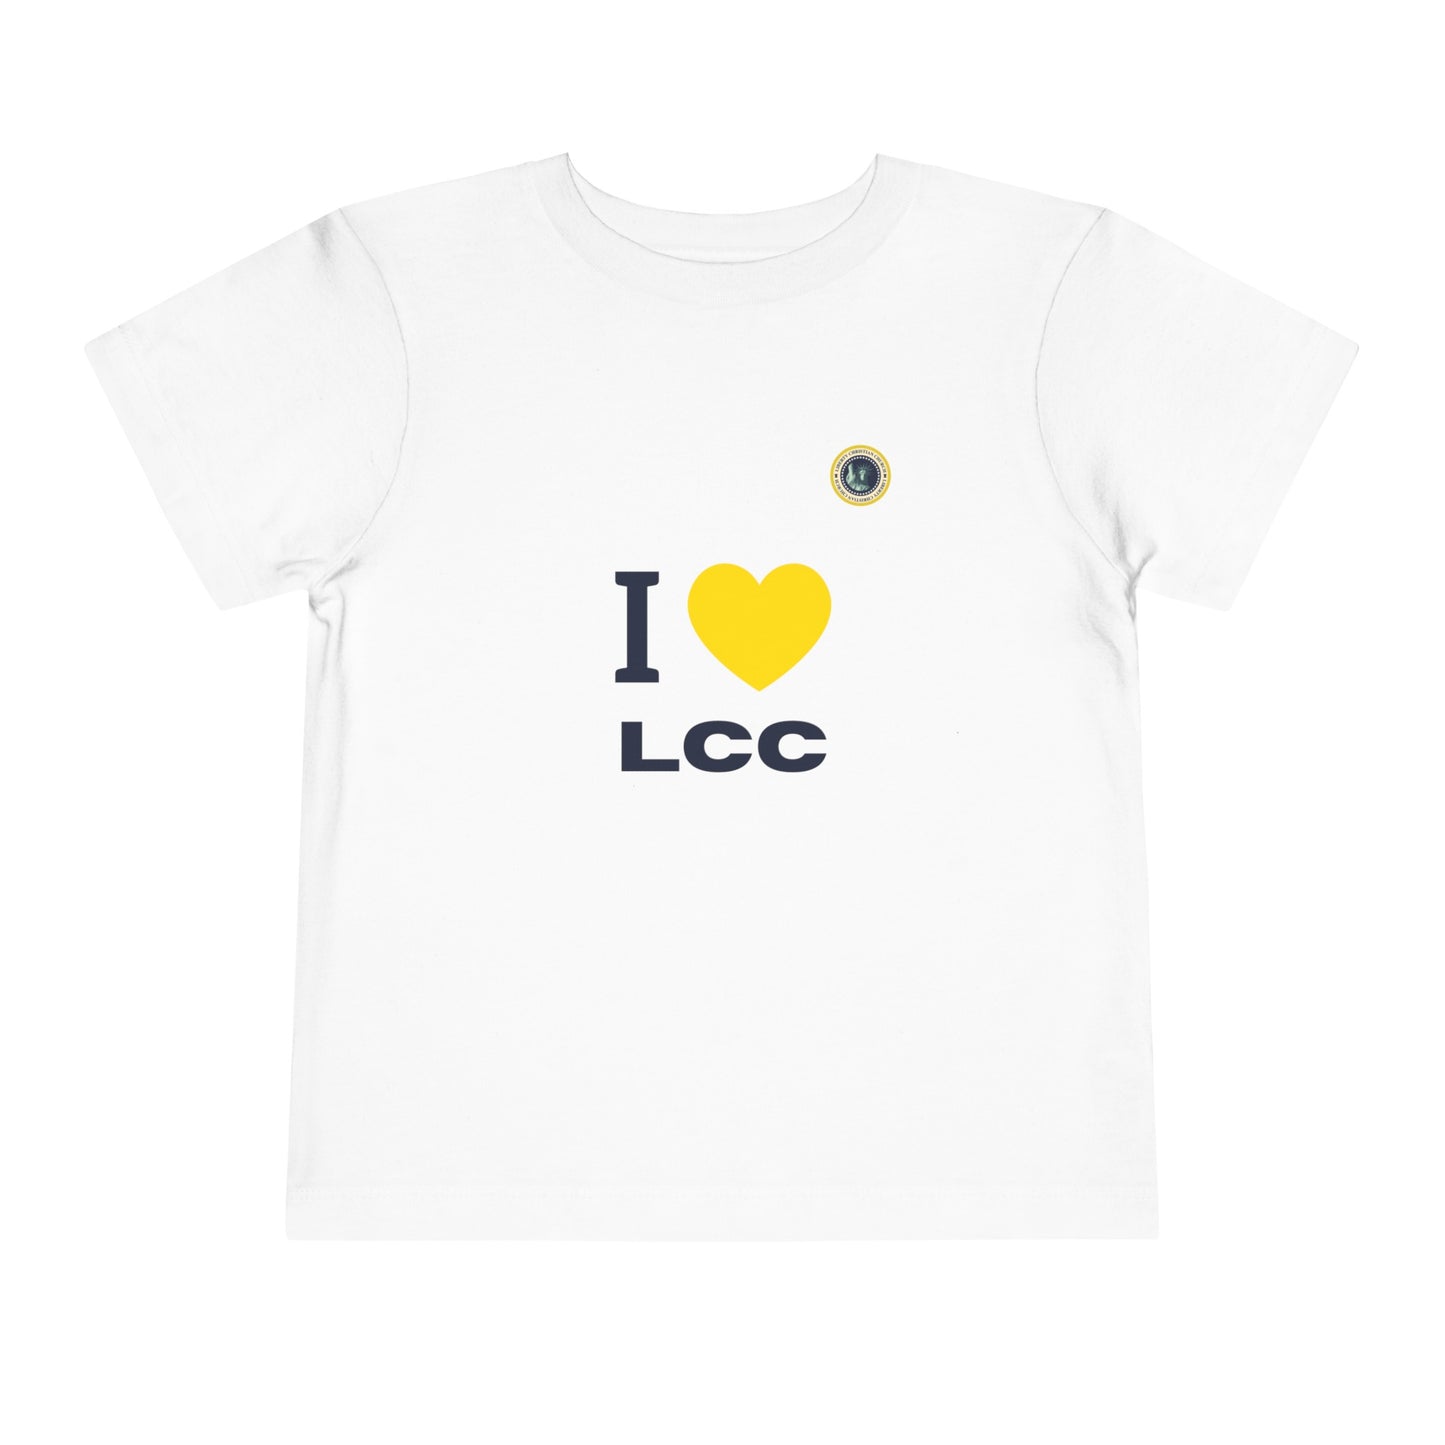 I Love LCC T-shirt (Toddler)